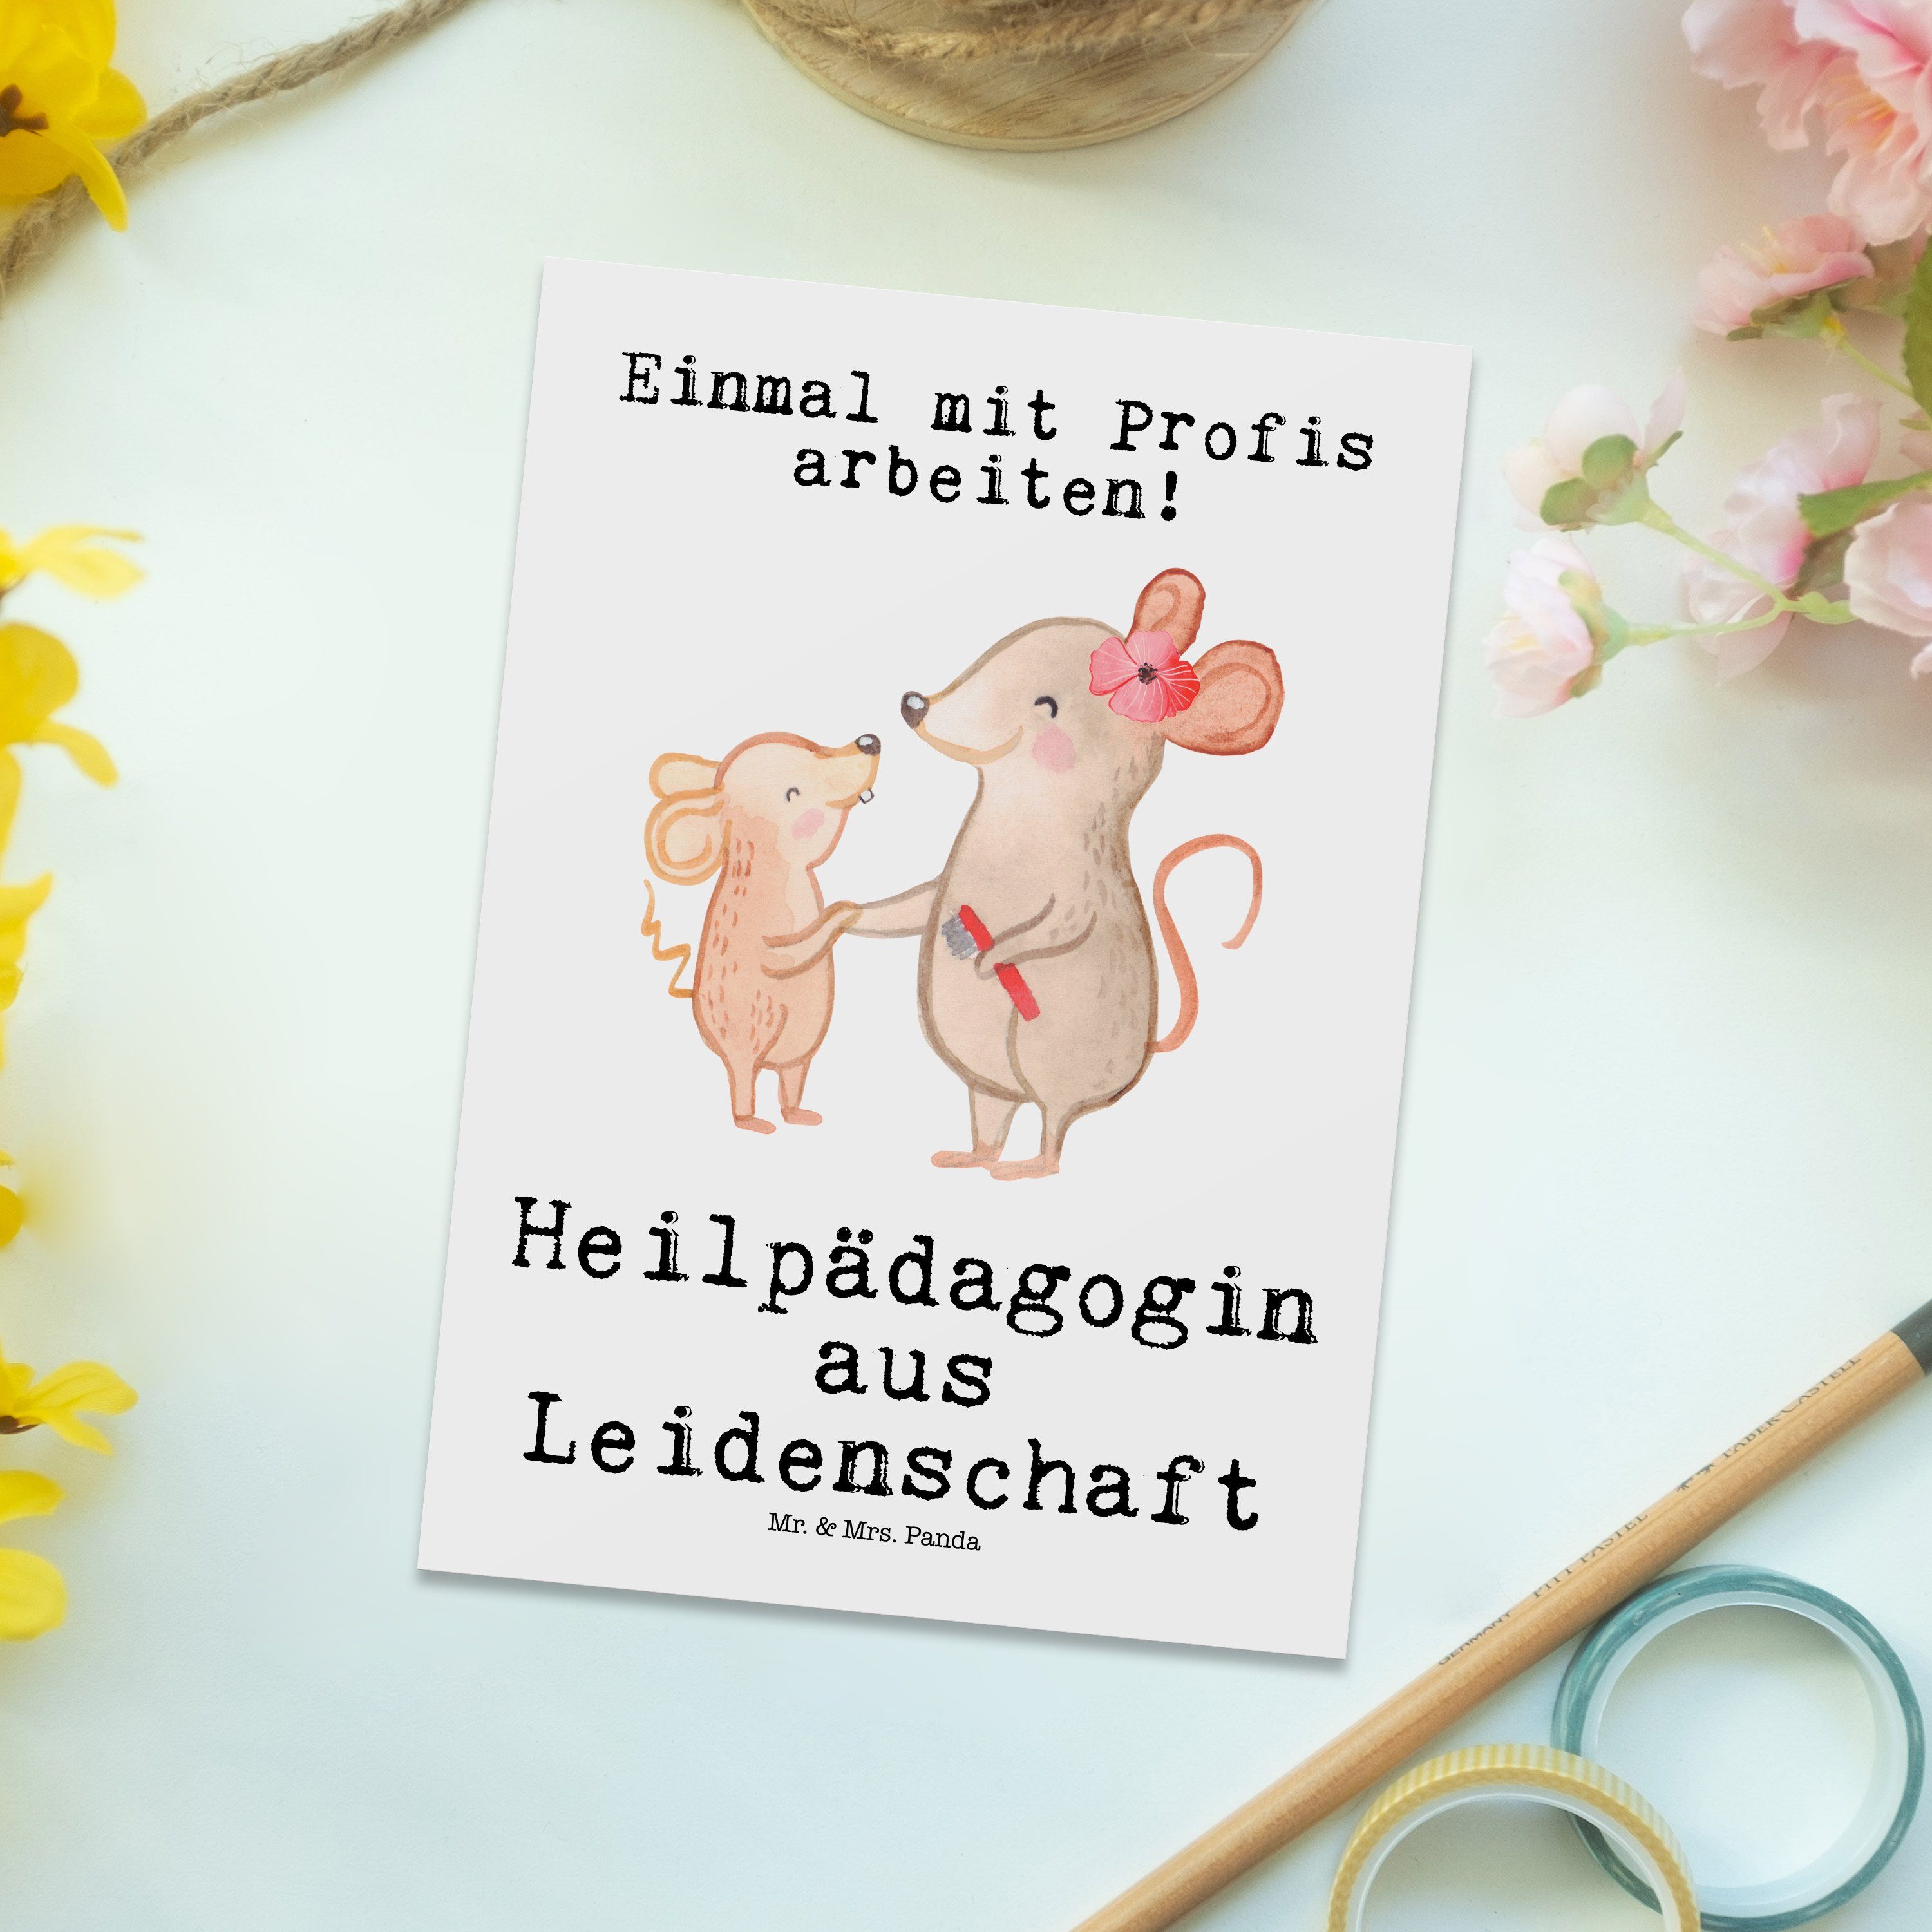 Weiß Kollege Leidenschaft - Mrs. aus - Heilpädagogin Dankeschön, Postkarte & Geschenk, Panda Mr.